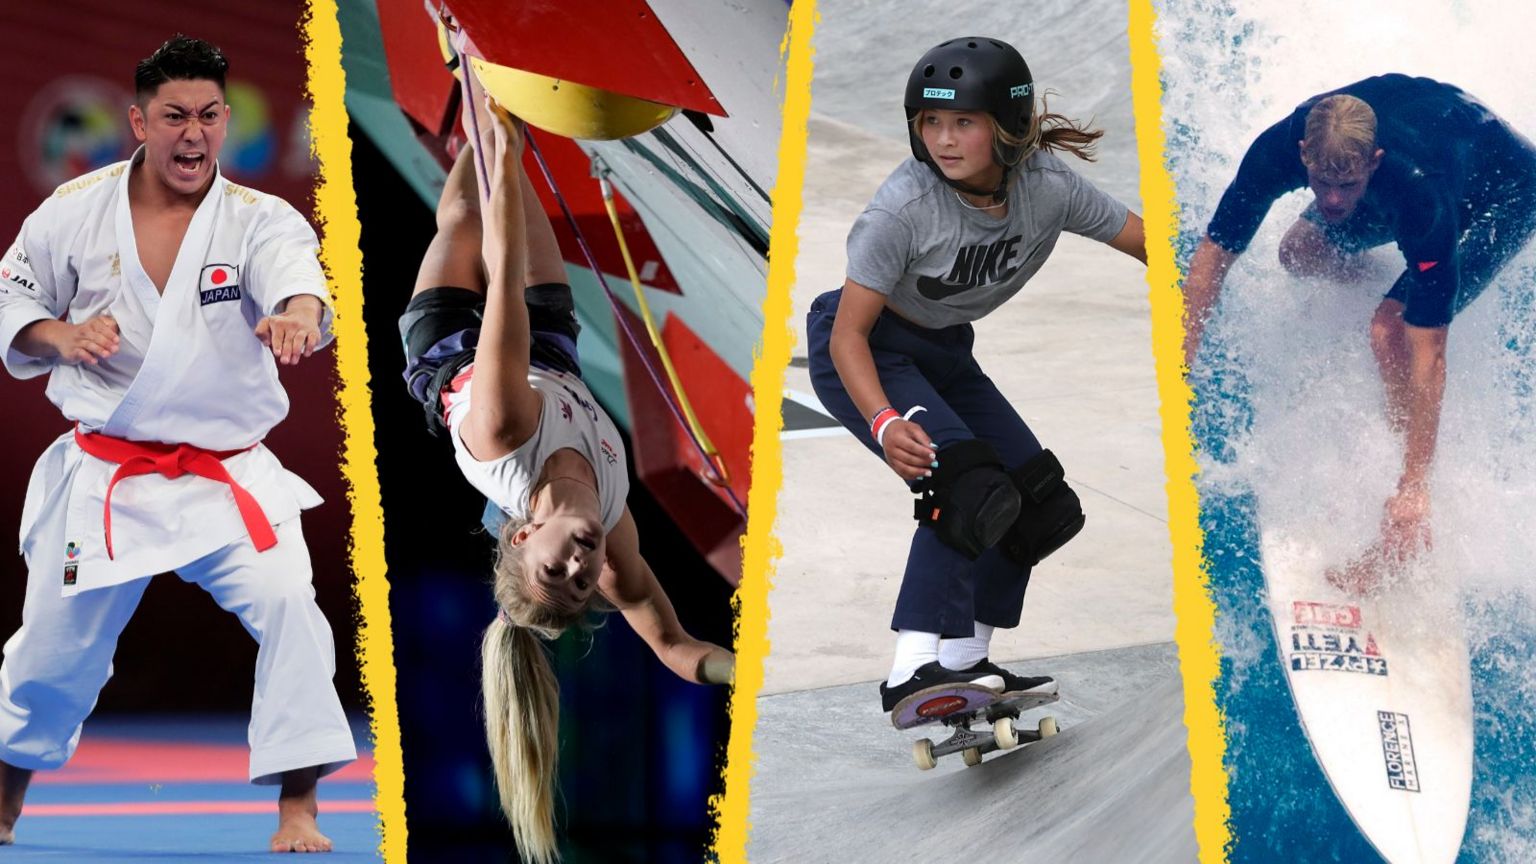 Collage of karateka Damian Quintero, climber Shauna Coxsey, skateboard star Sky Brown, and surfer John John Florence